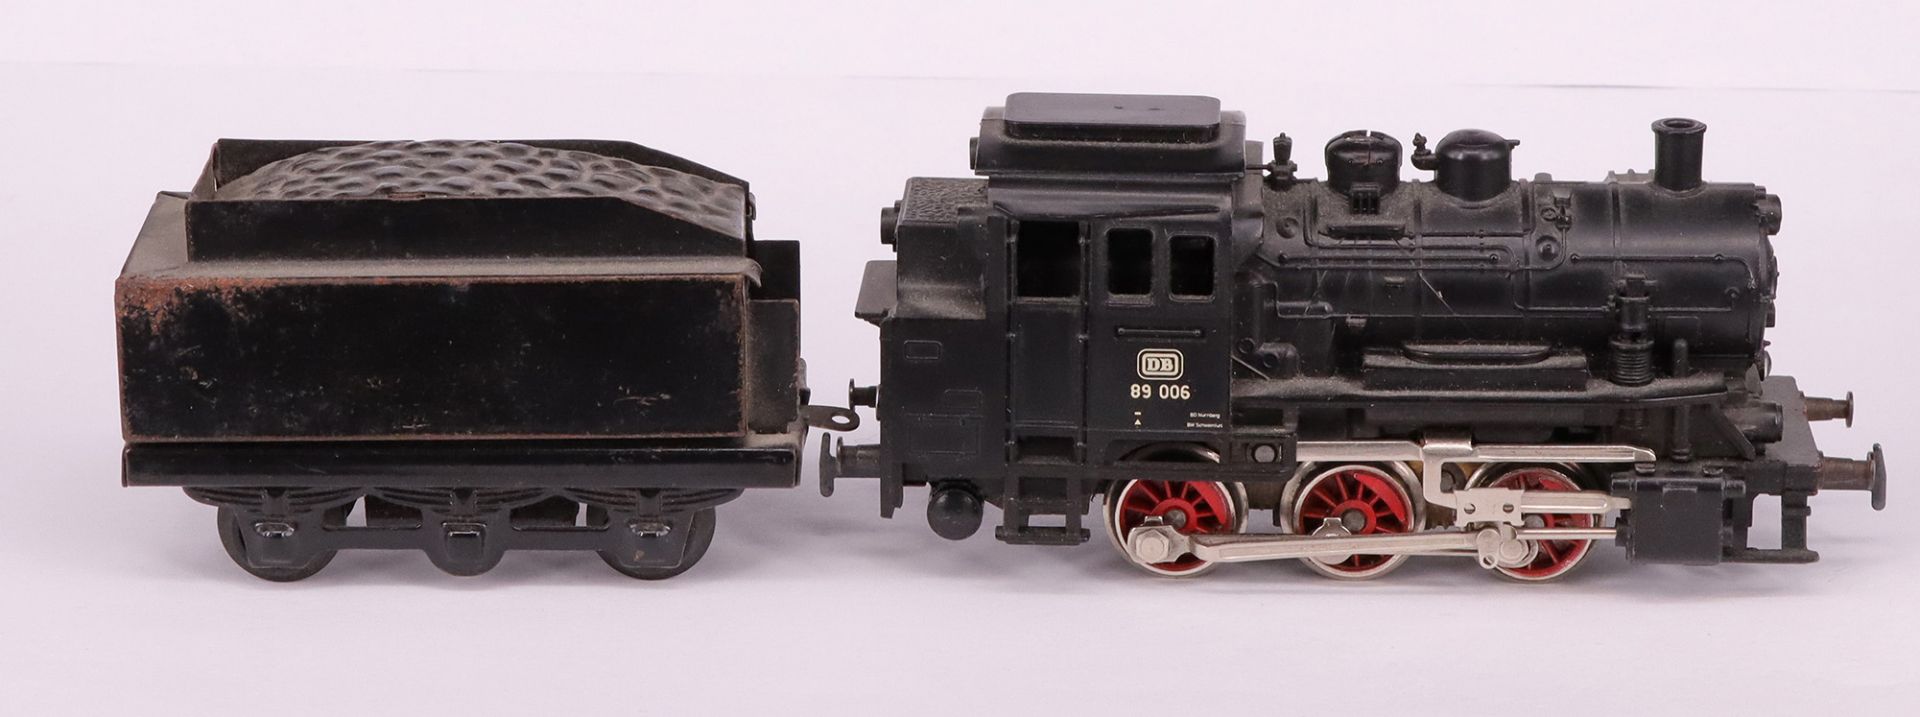 Konvolut Märklin, Spur H0, Lokomotiven (E-Loks, Dampfloks und einige Tender), bespielt, - Image 3 of 13